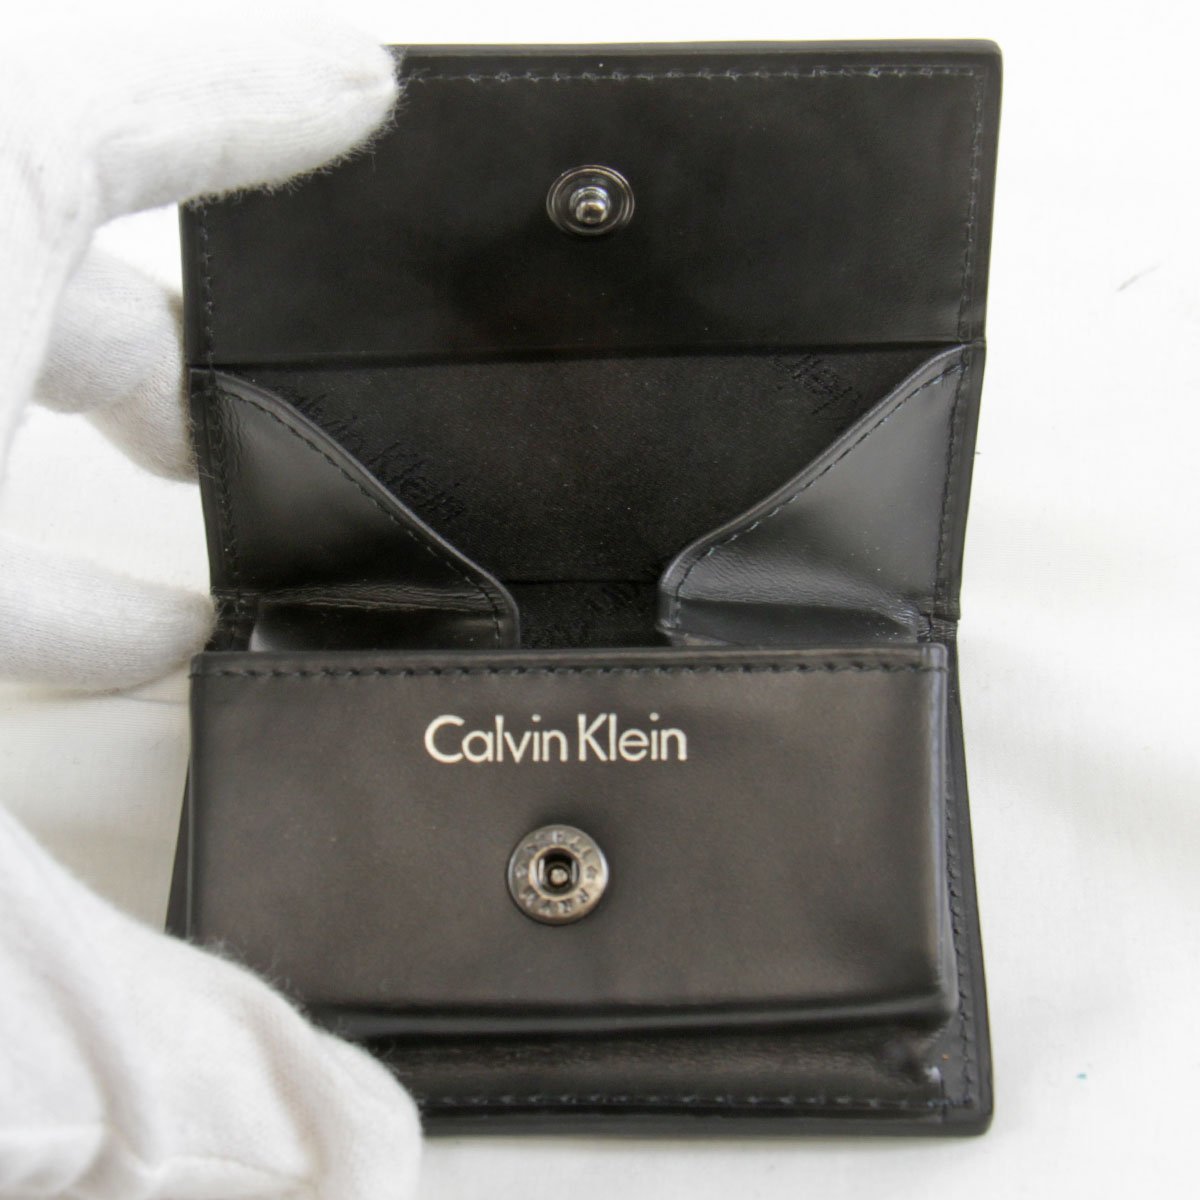 [USED] Calvin klein Calvin Klein coin case navy leather 